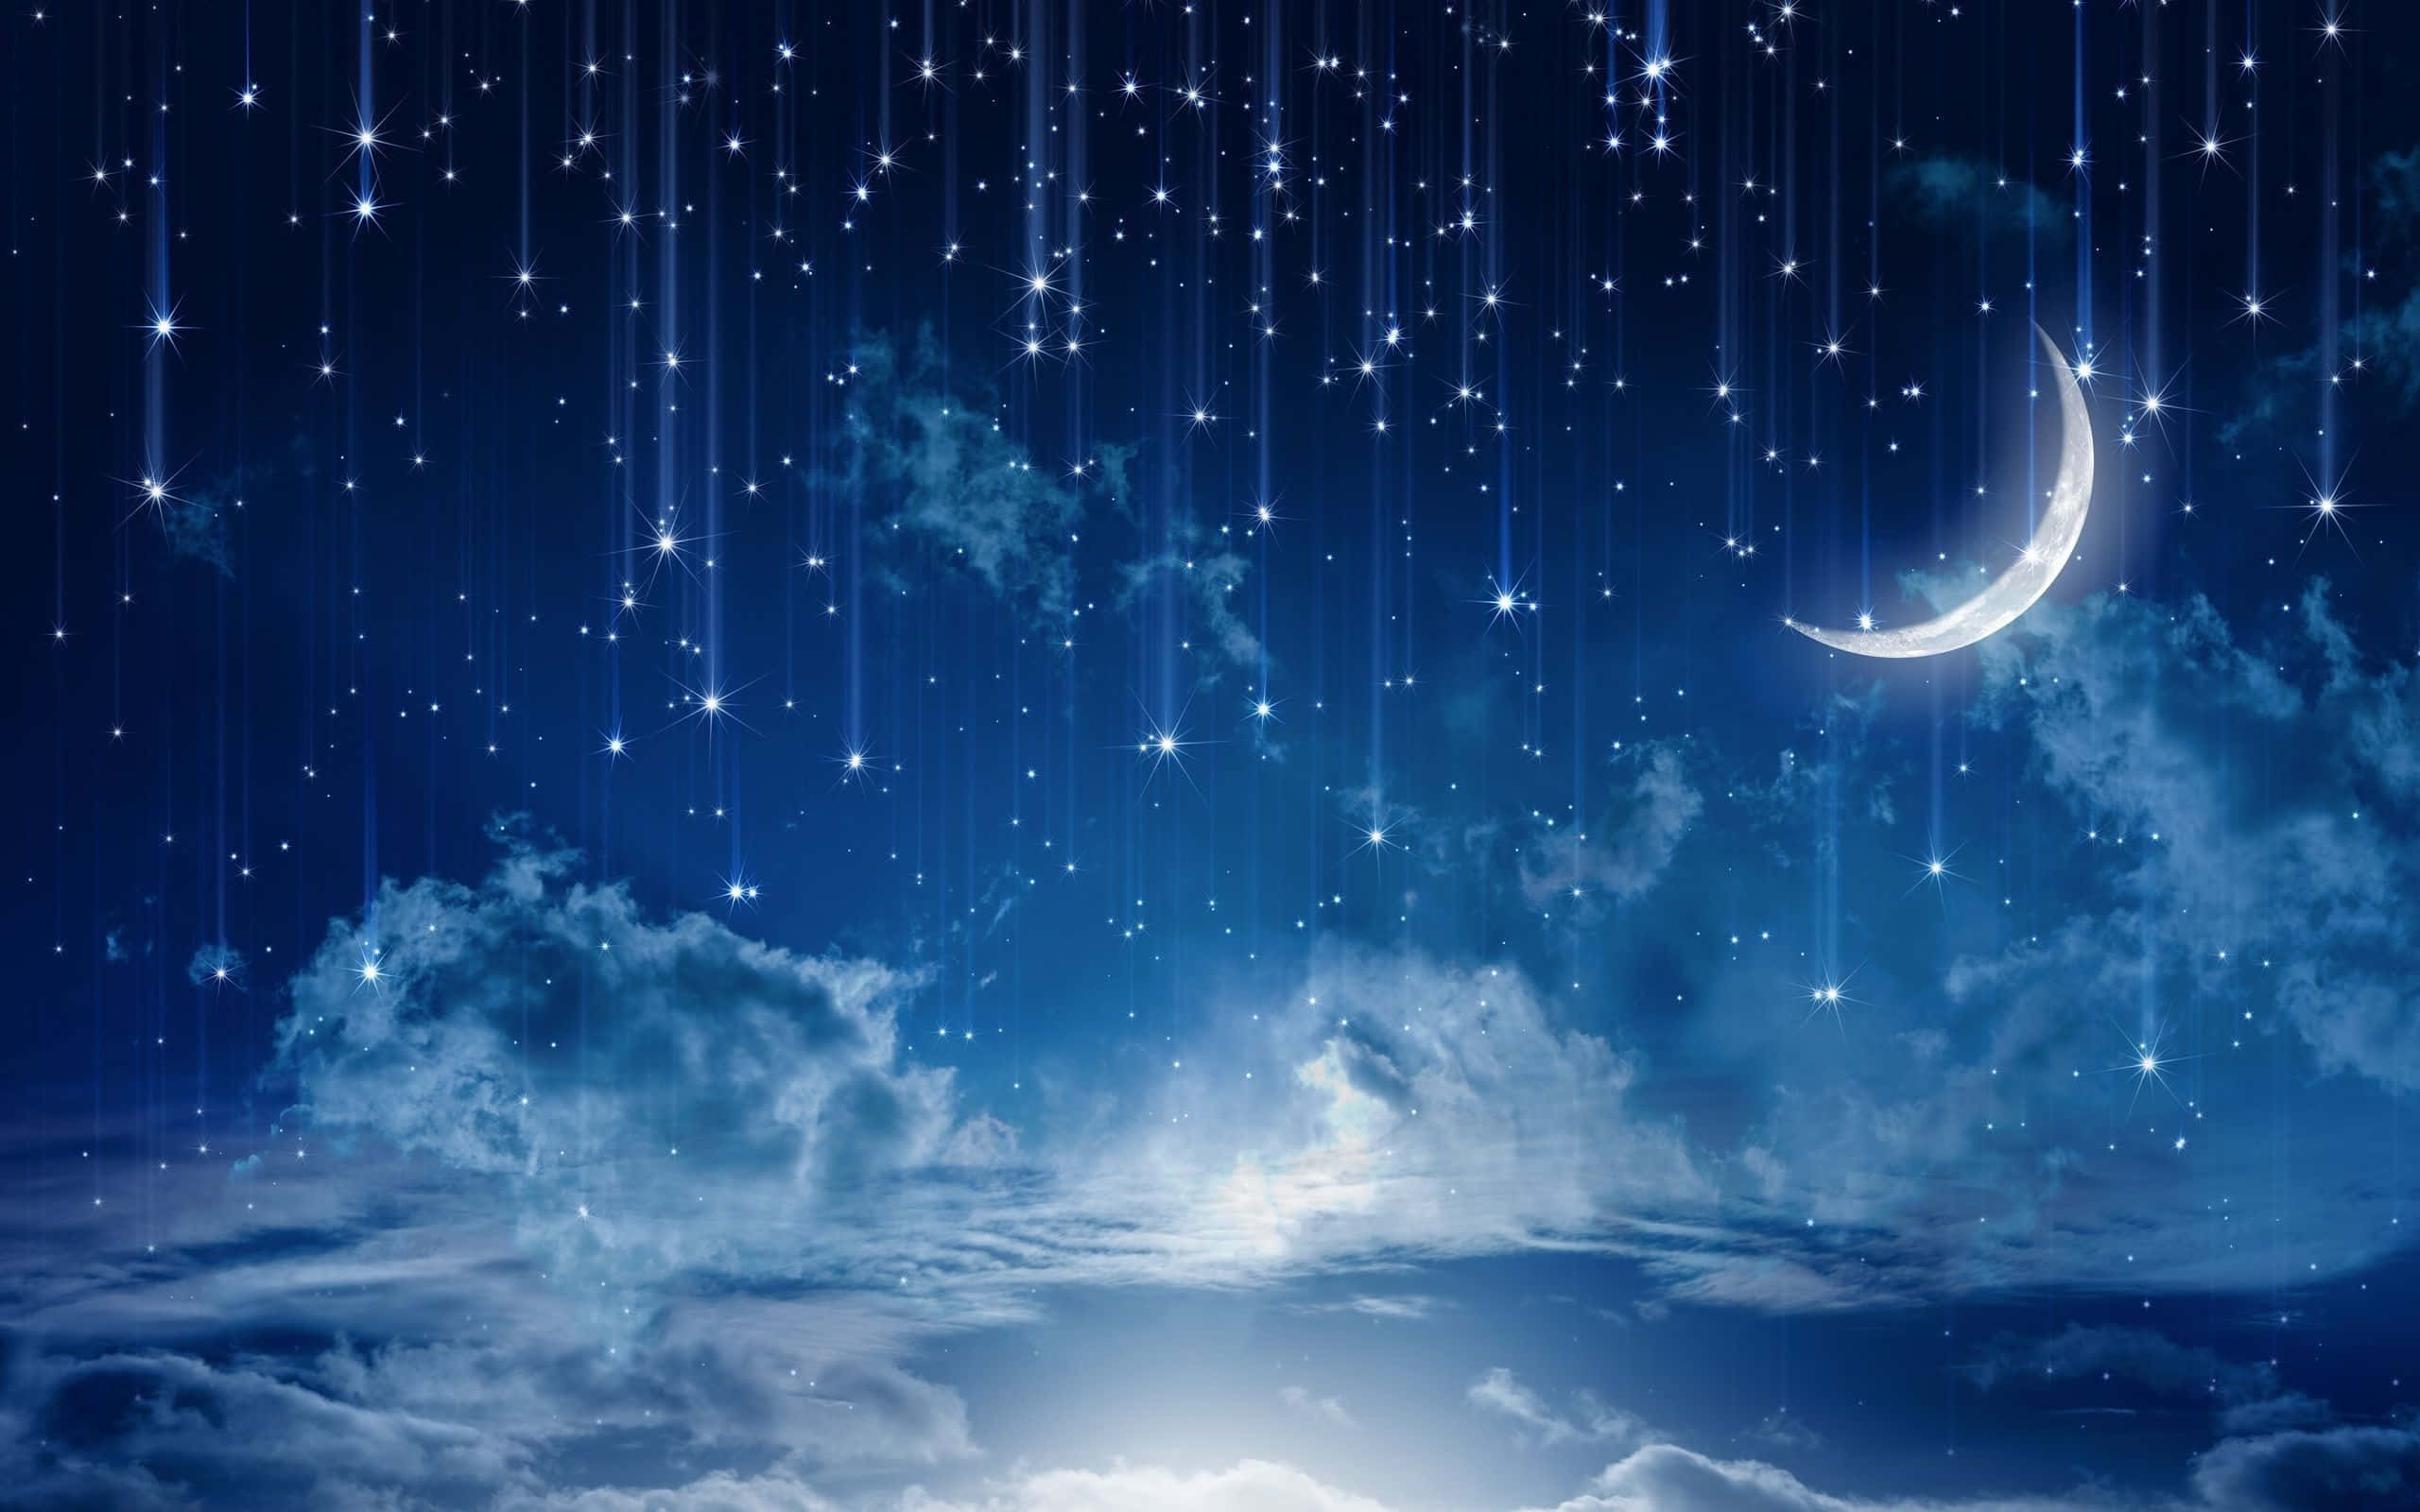 Enchanting Moon and Stars Night Sky